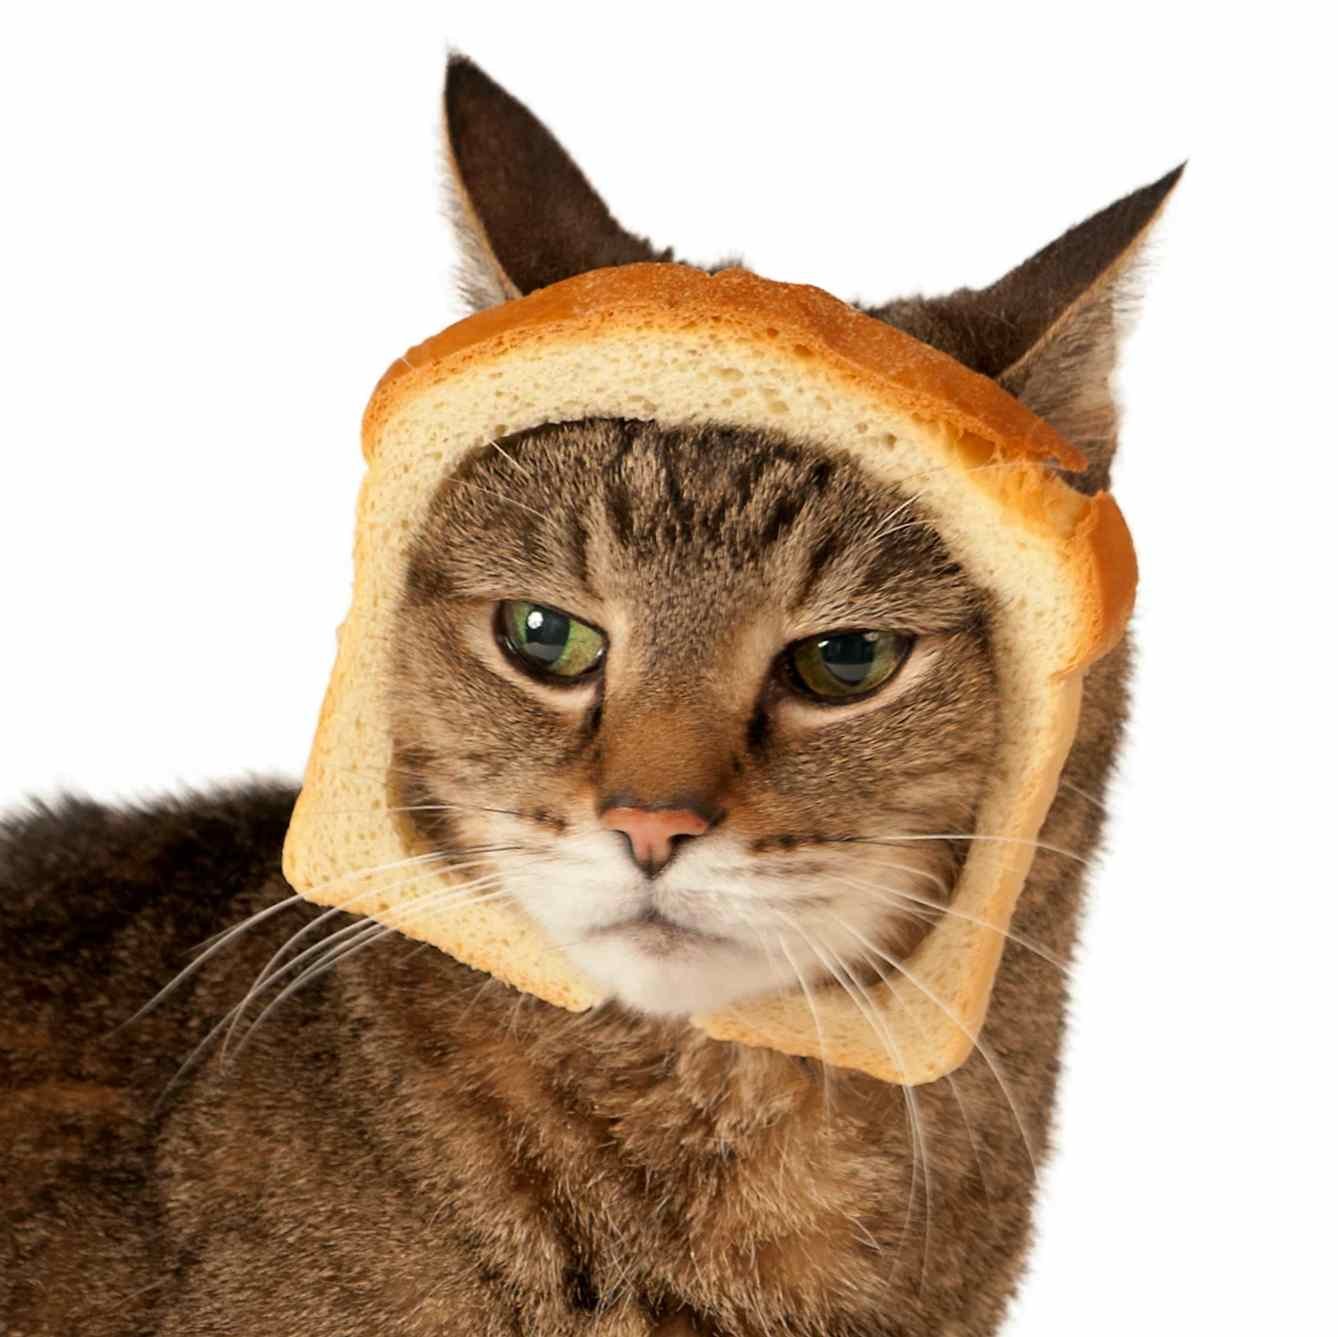 Cat having bread on its face